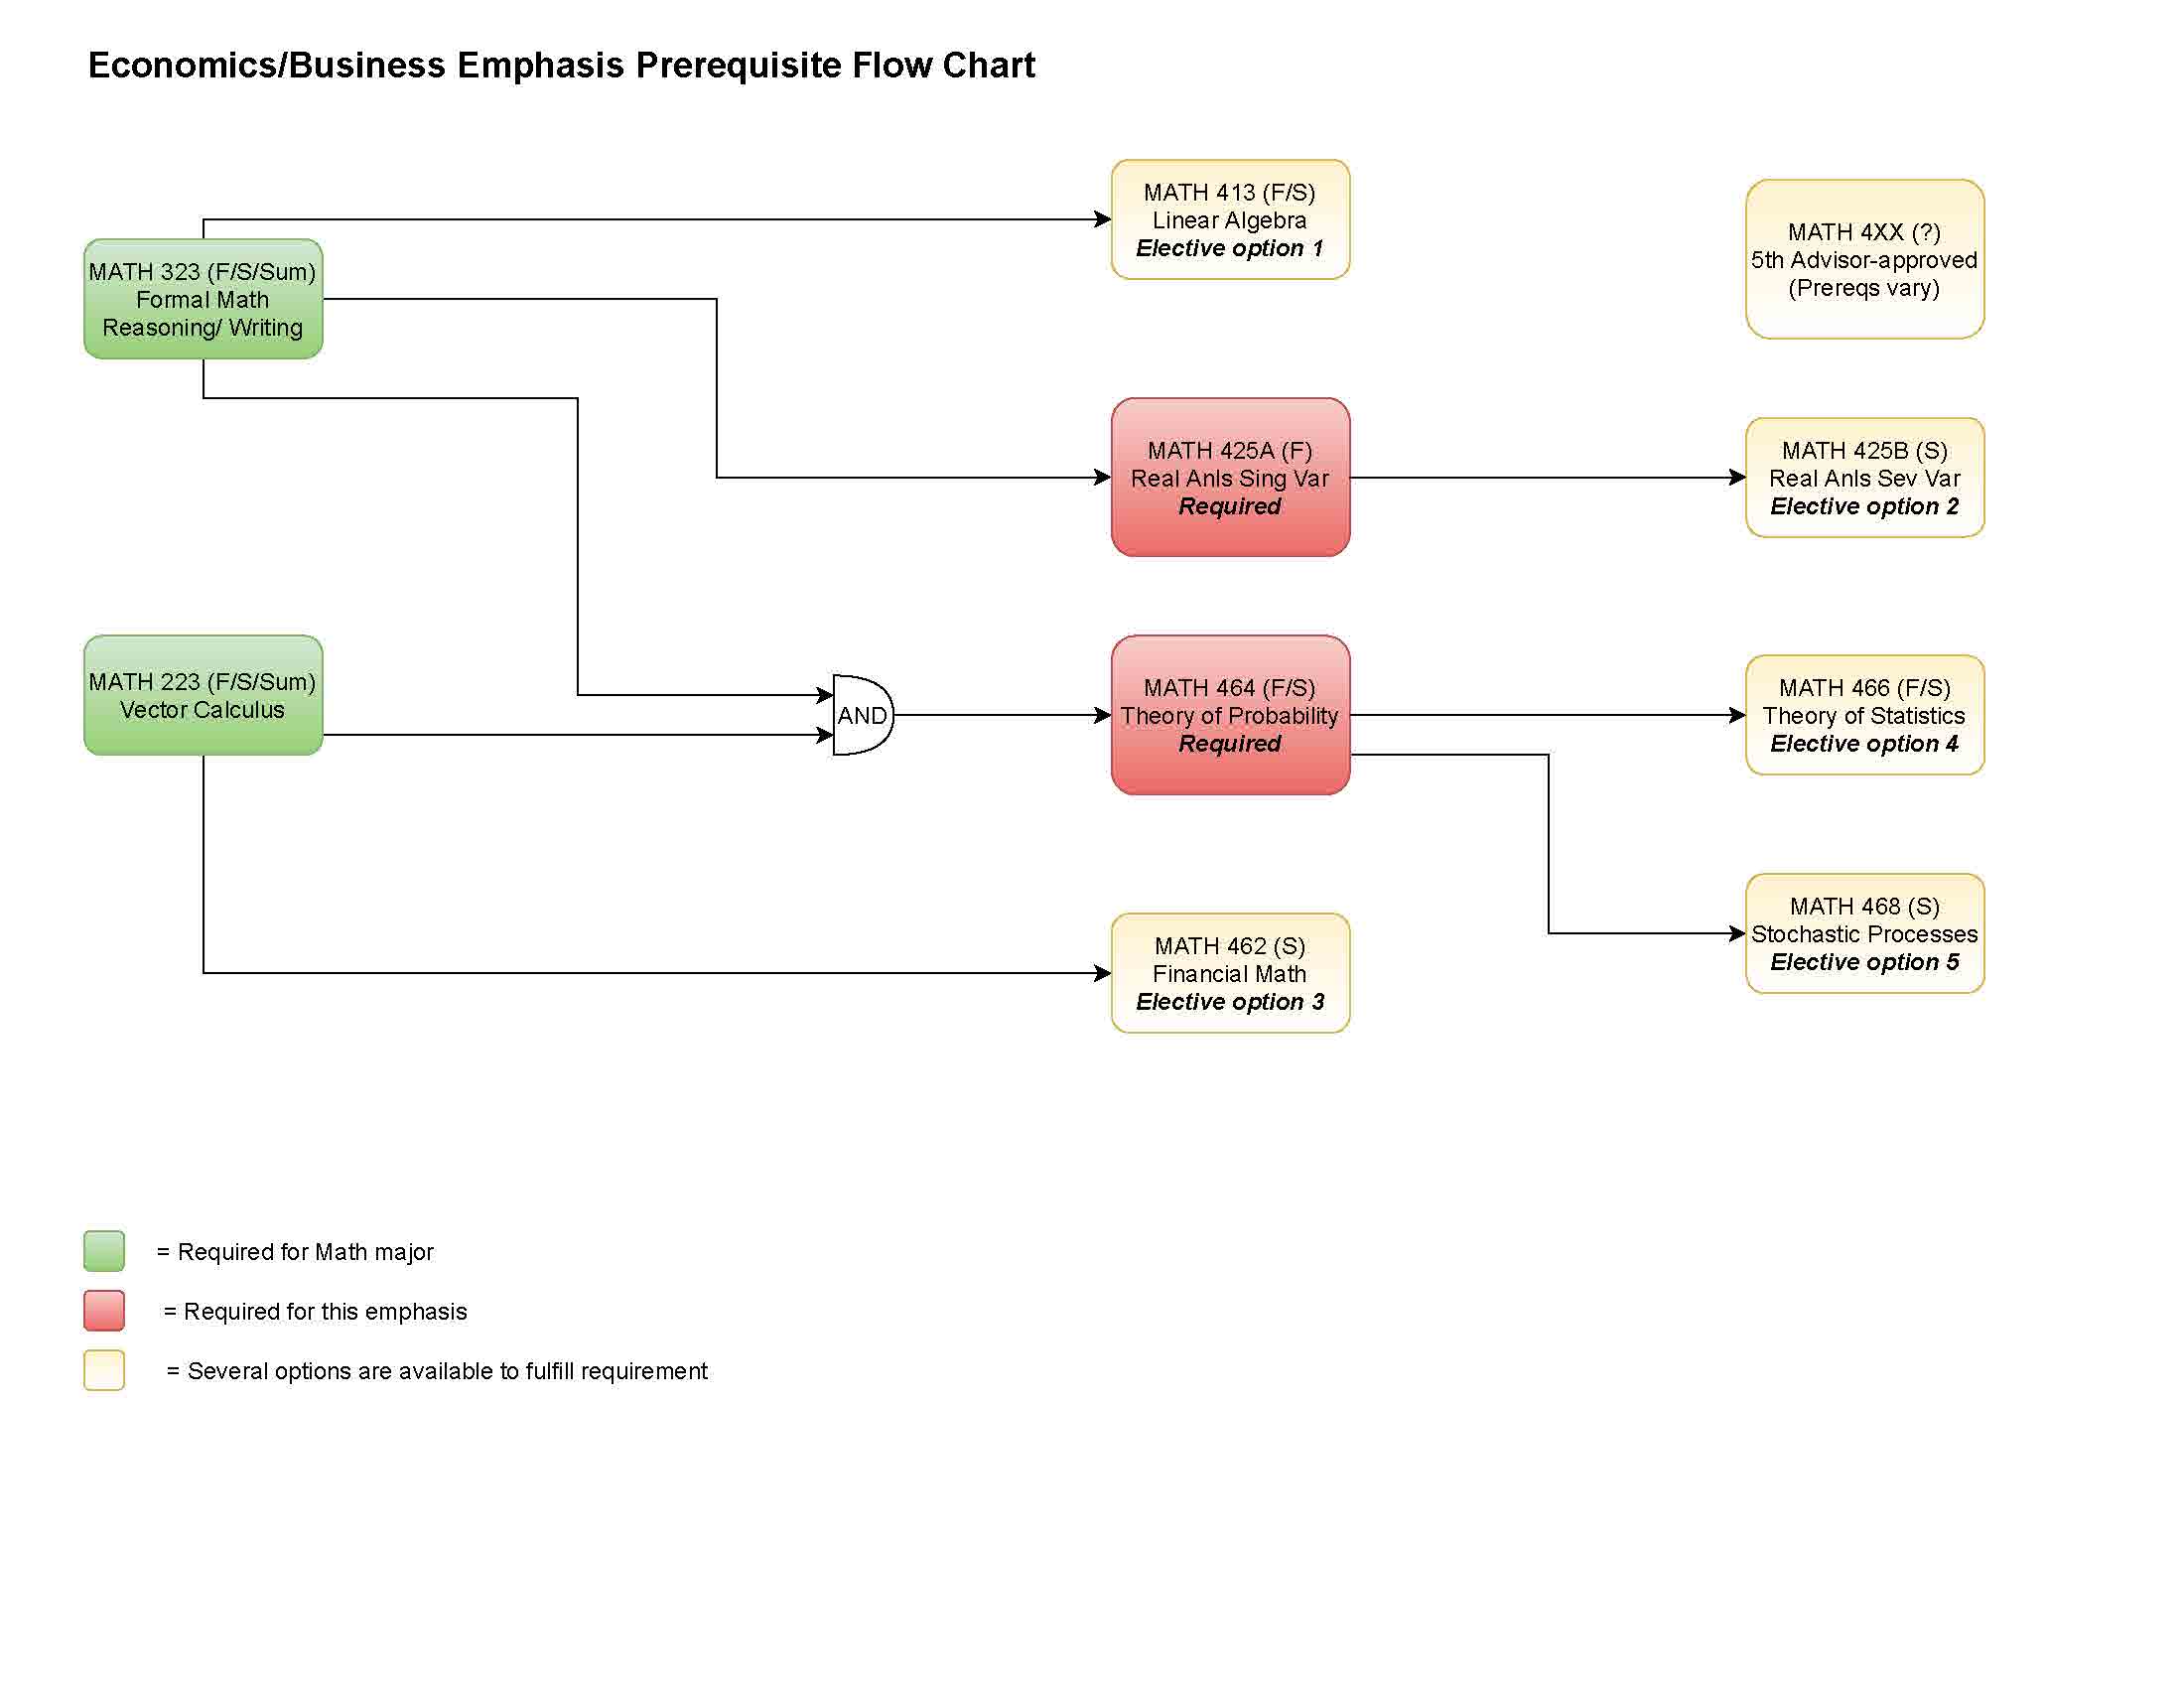 prerequisite flowchart for economics/business emphasis (click image for downloadable PDF)